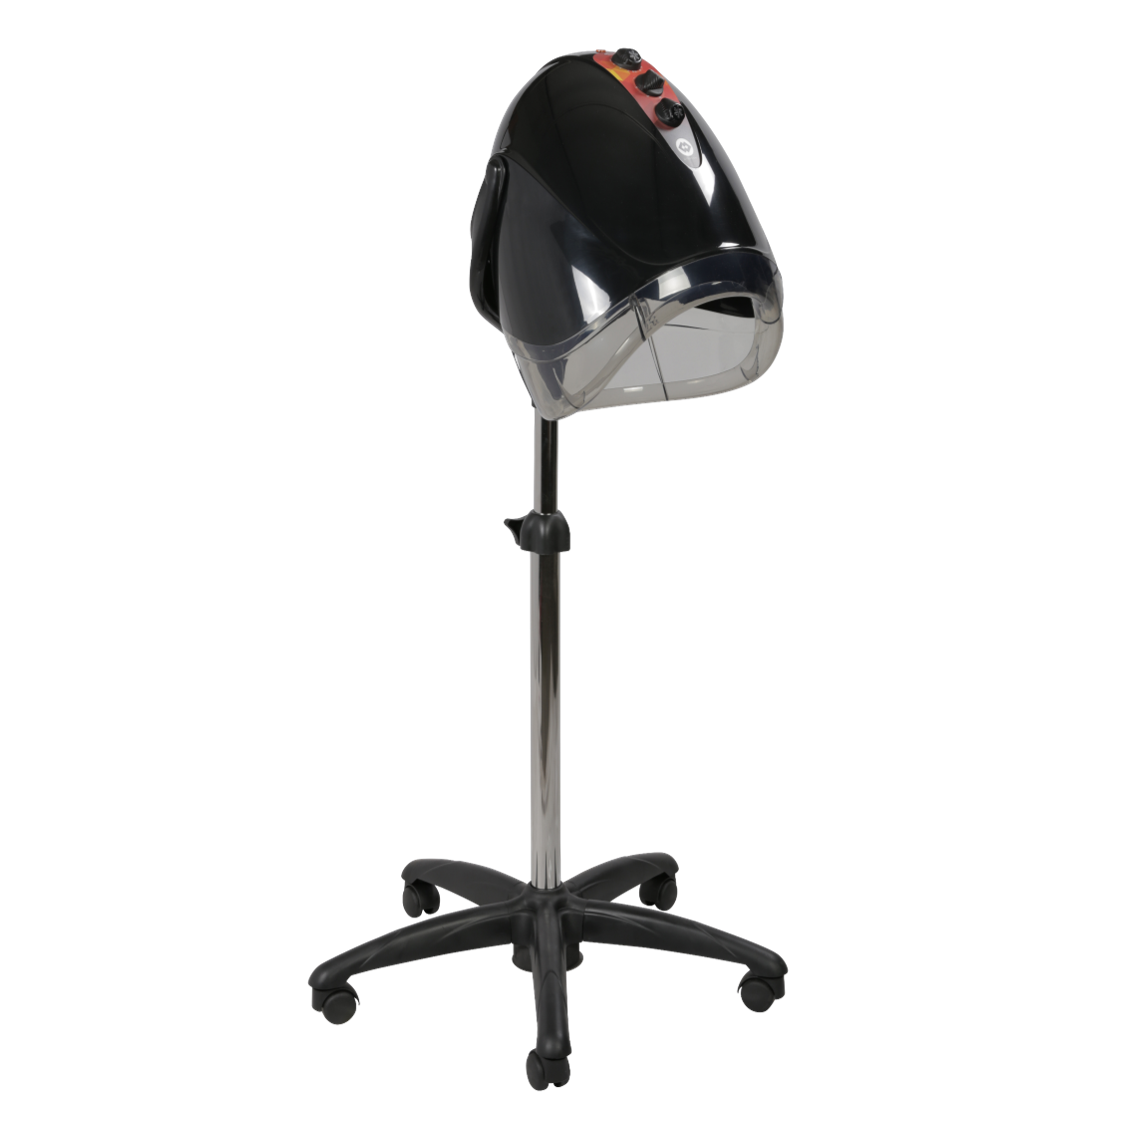 Graeson Ovo Dryer Rollerstand - Garfield Commercial Enterprises Salon Equipment Spa Furniture Barber Chair Luxury